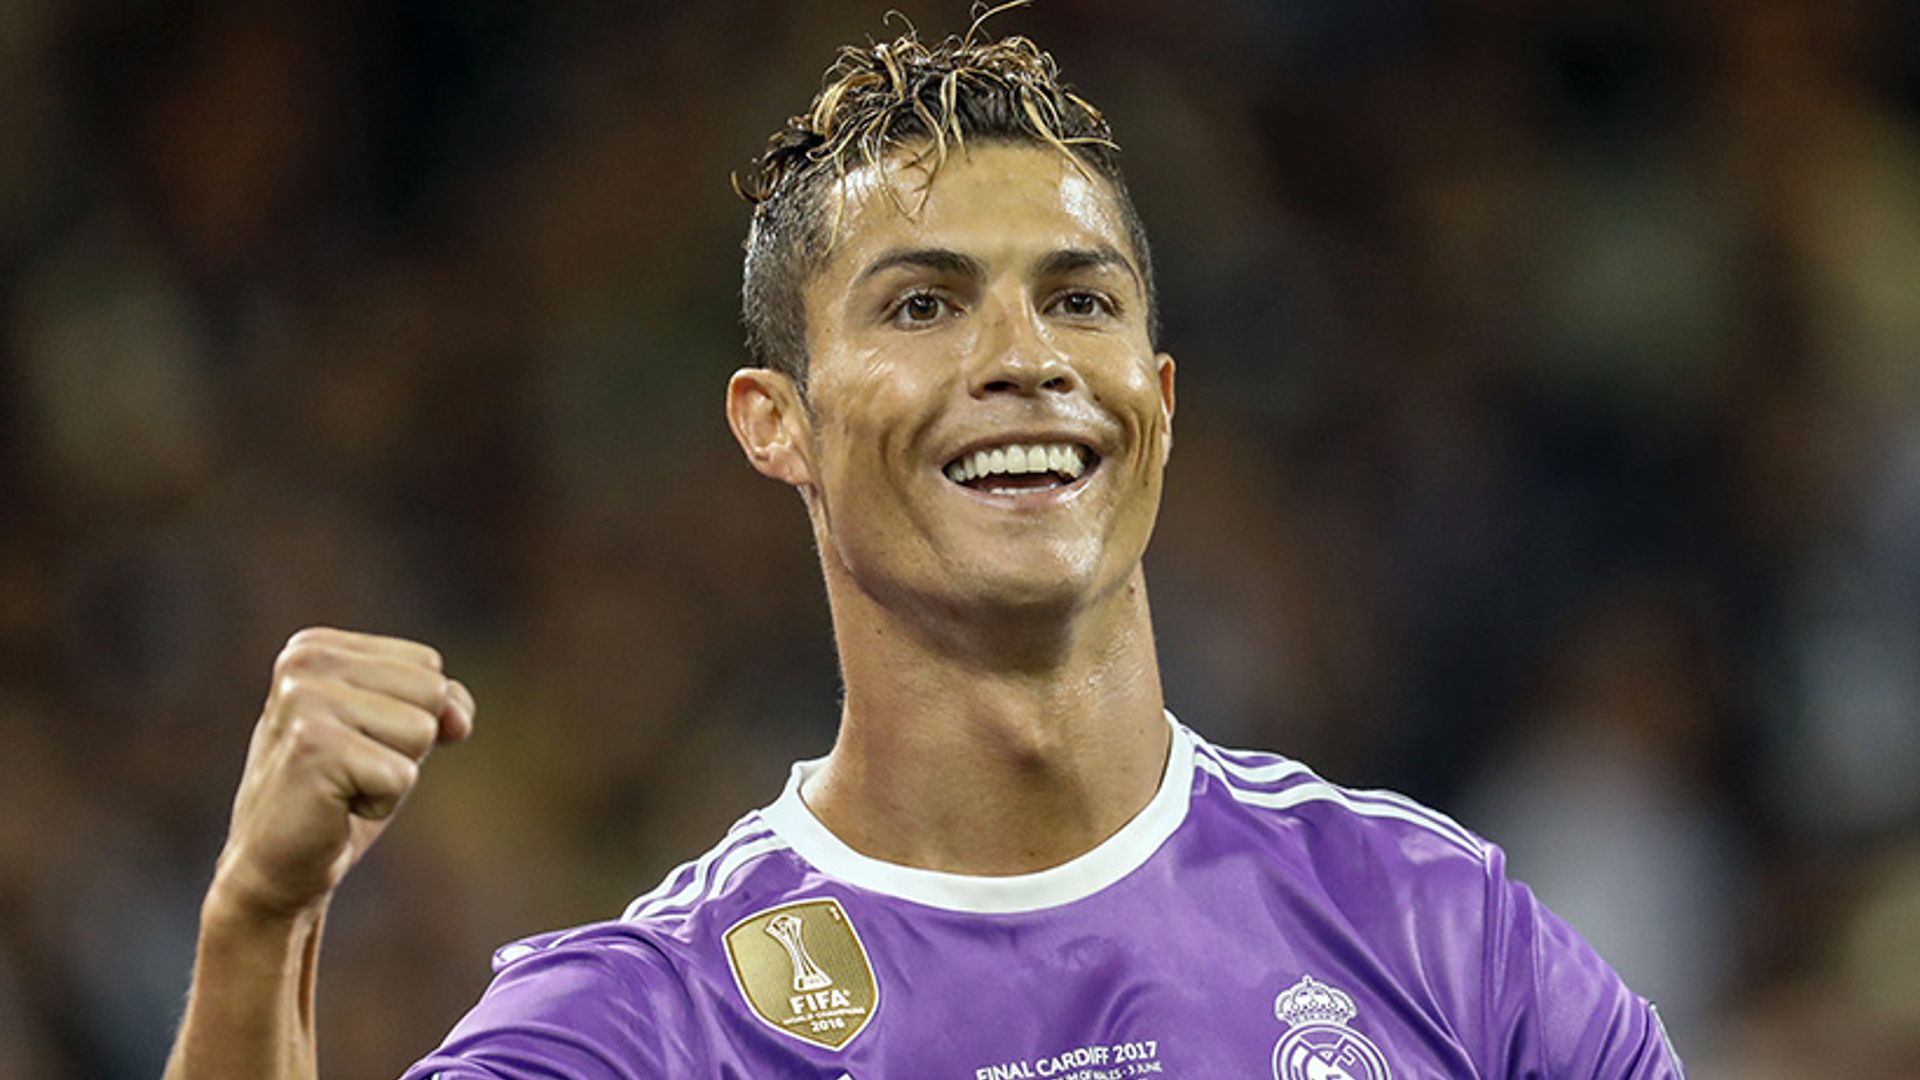 Real Madrid S Cristiano Ronaldo Reveals Shocking New Haircut Hello